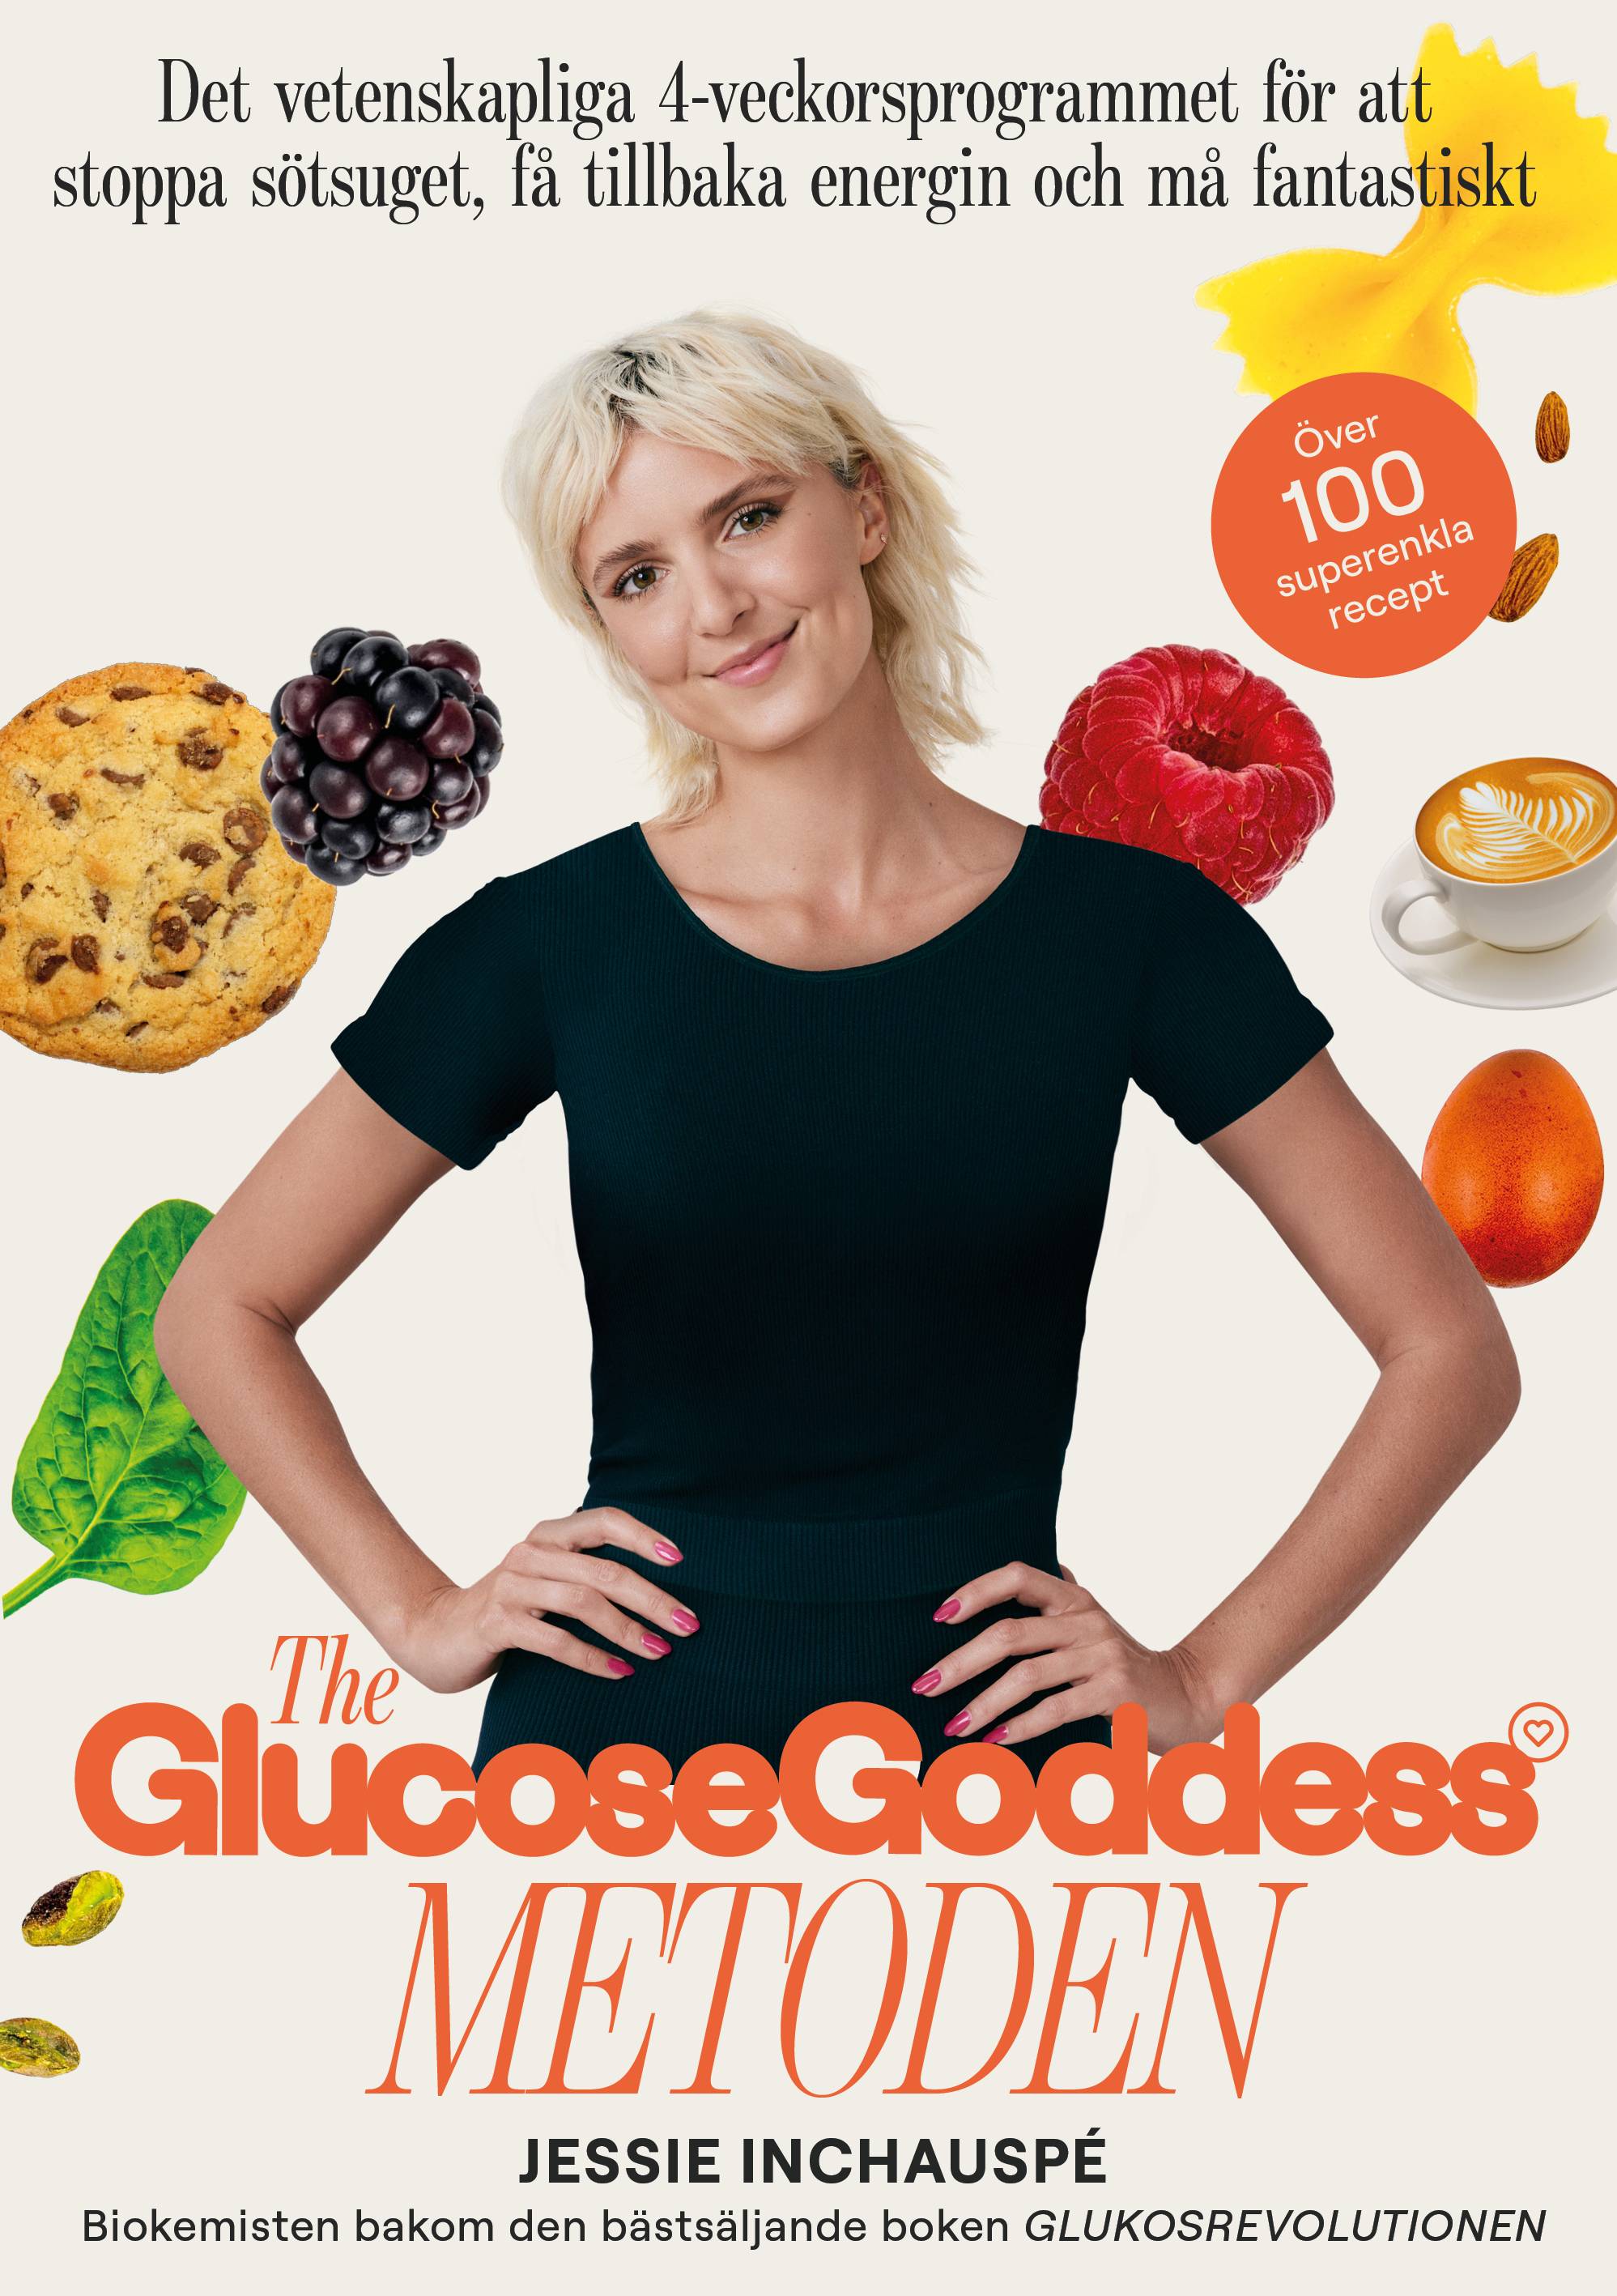 Glucose goddess metoden